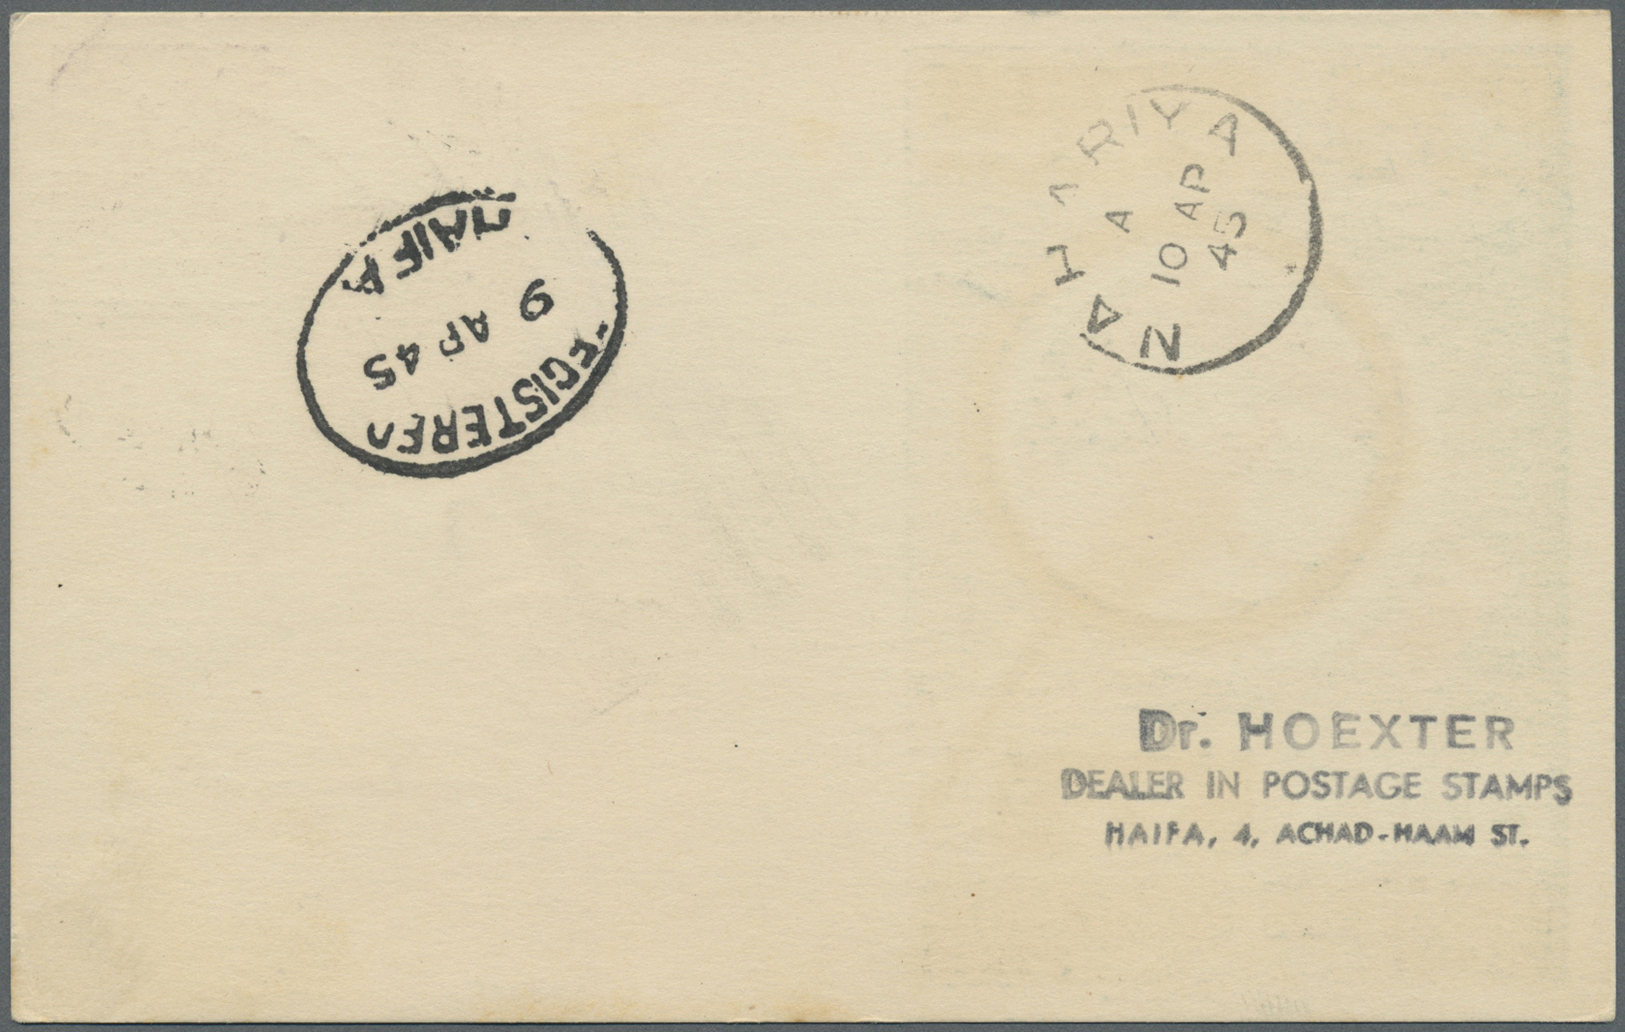 GA Palästina: 1945, Tel Aviv philatellic exhibiton stationery cards used (6): air mail registered to London (2), air to